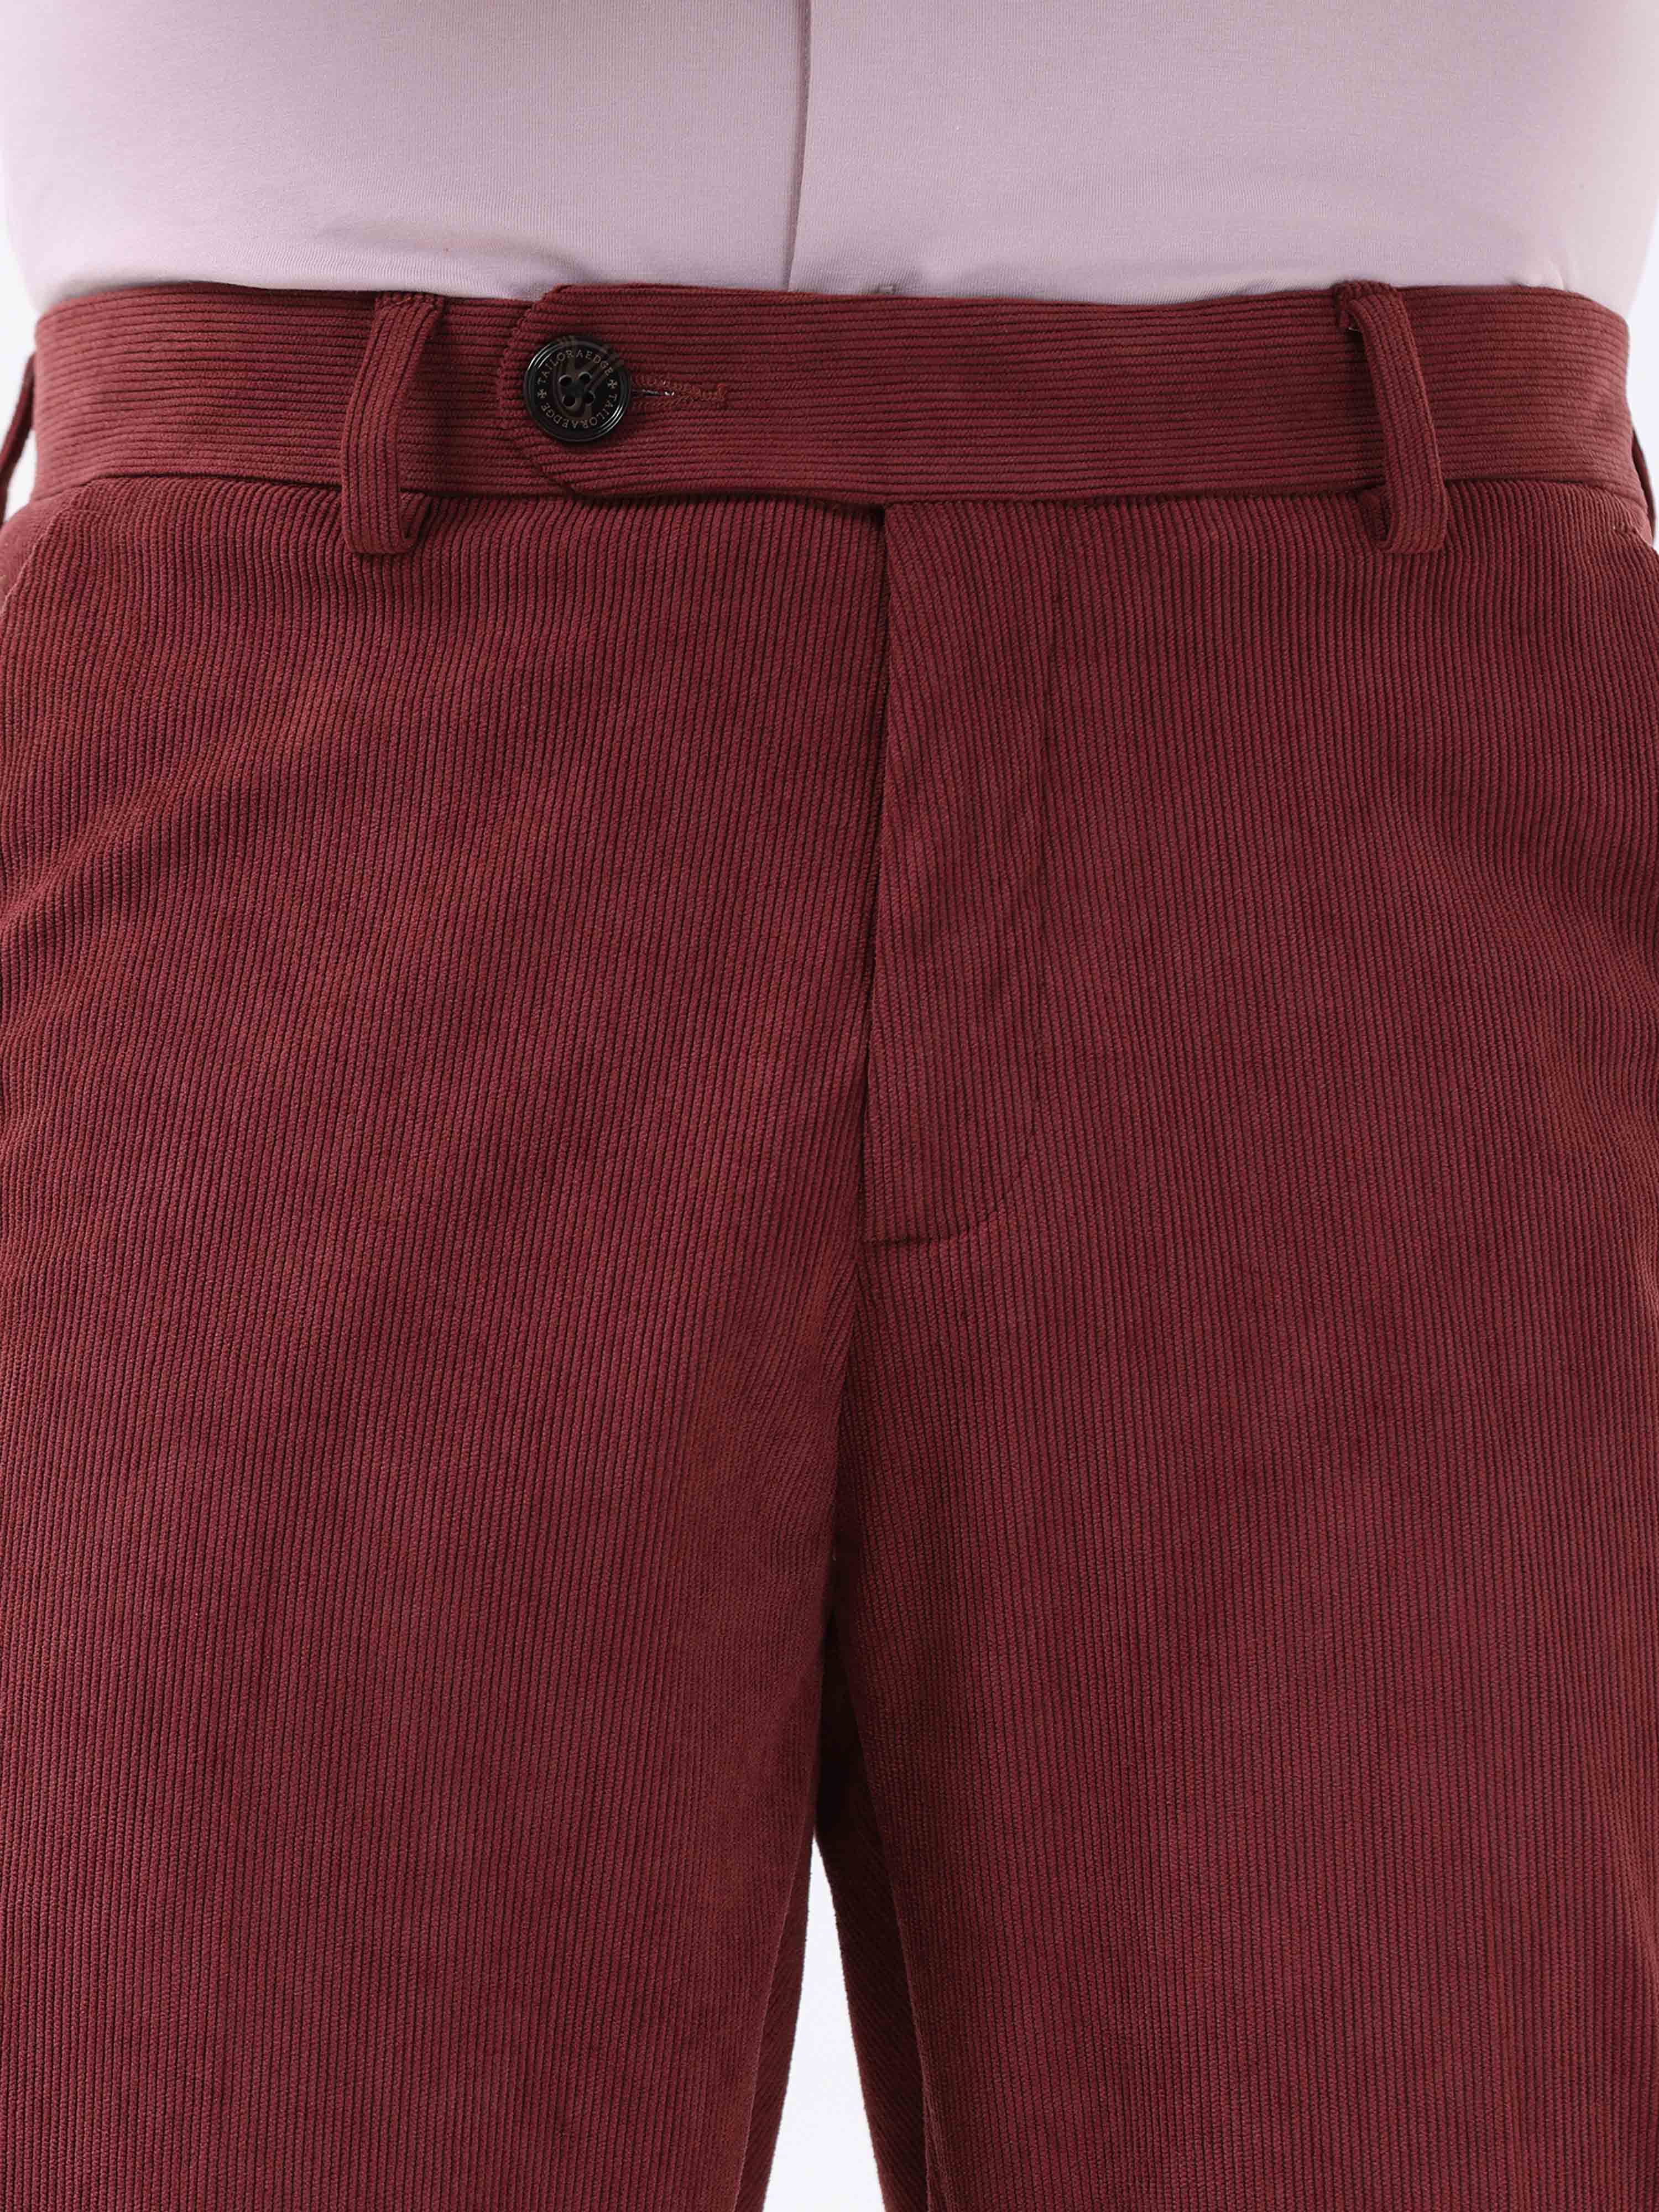 Corduroy trousers Regular Fit - Burgundy - Men | H&M